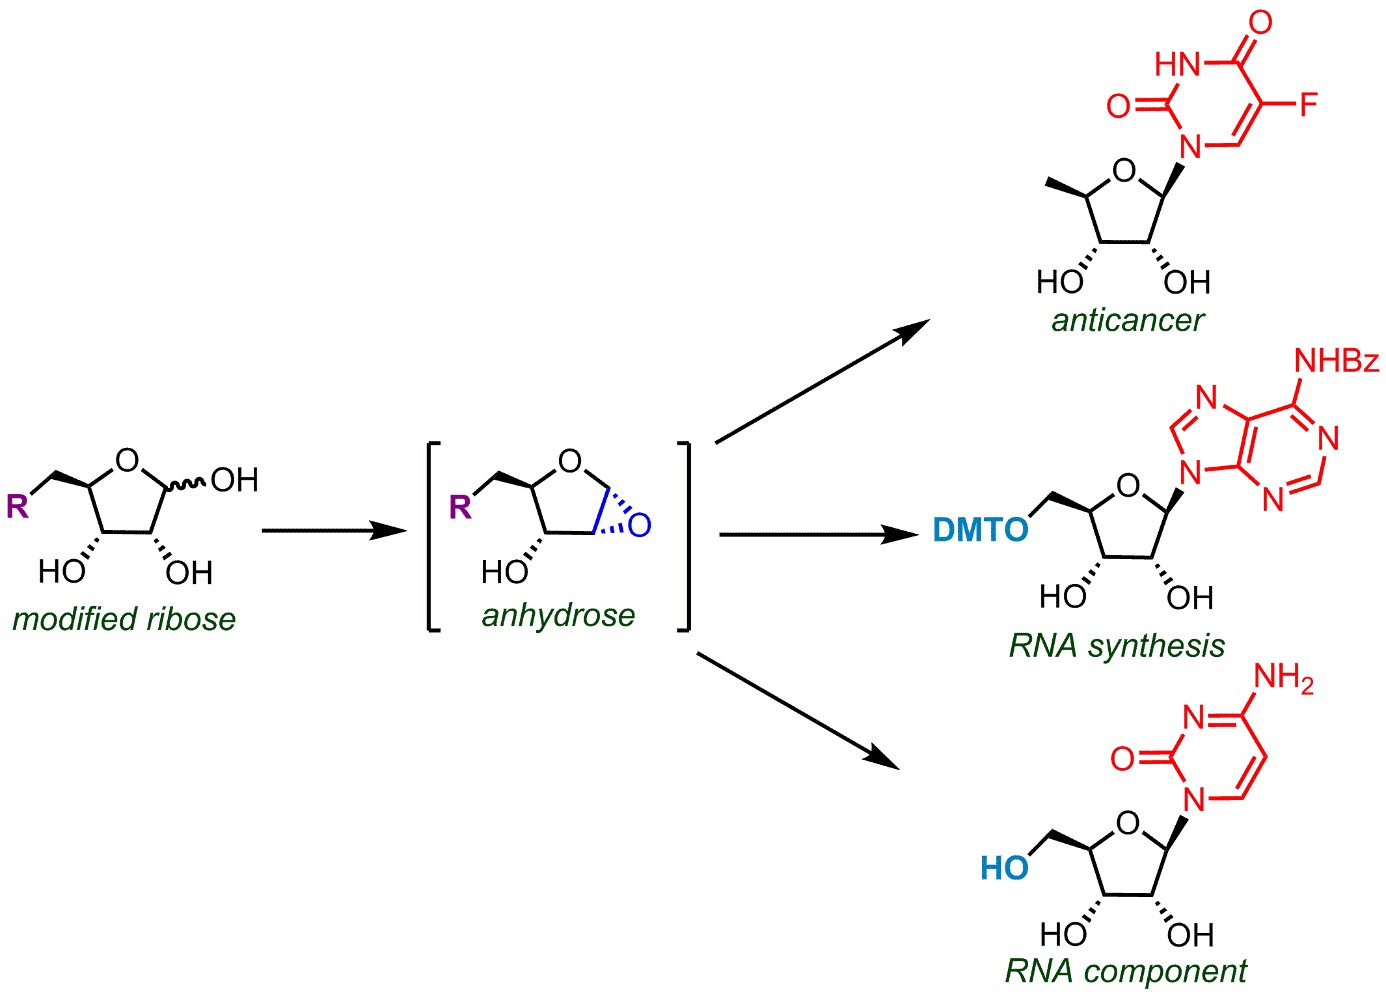 Novel straightforward synthesis of nucleosides